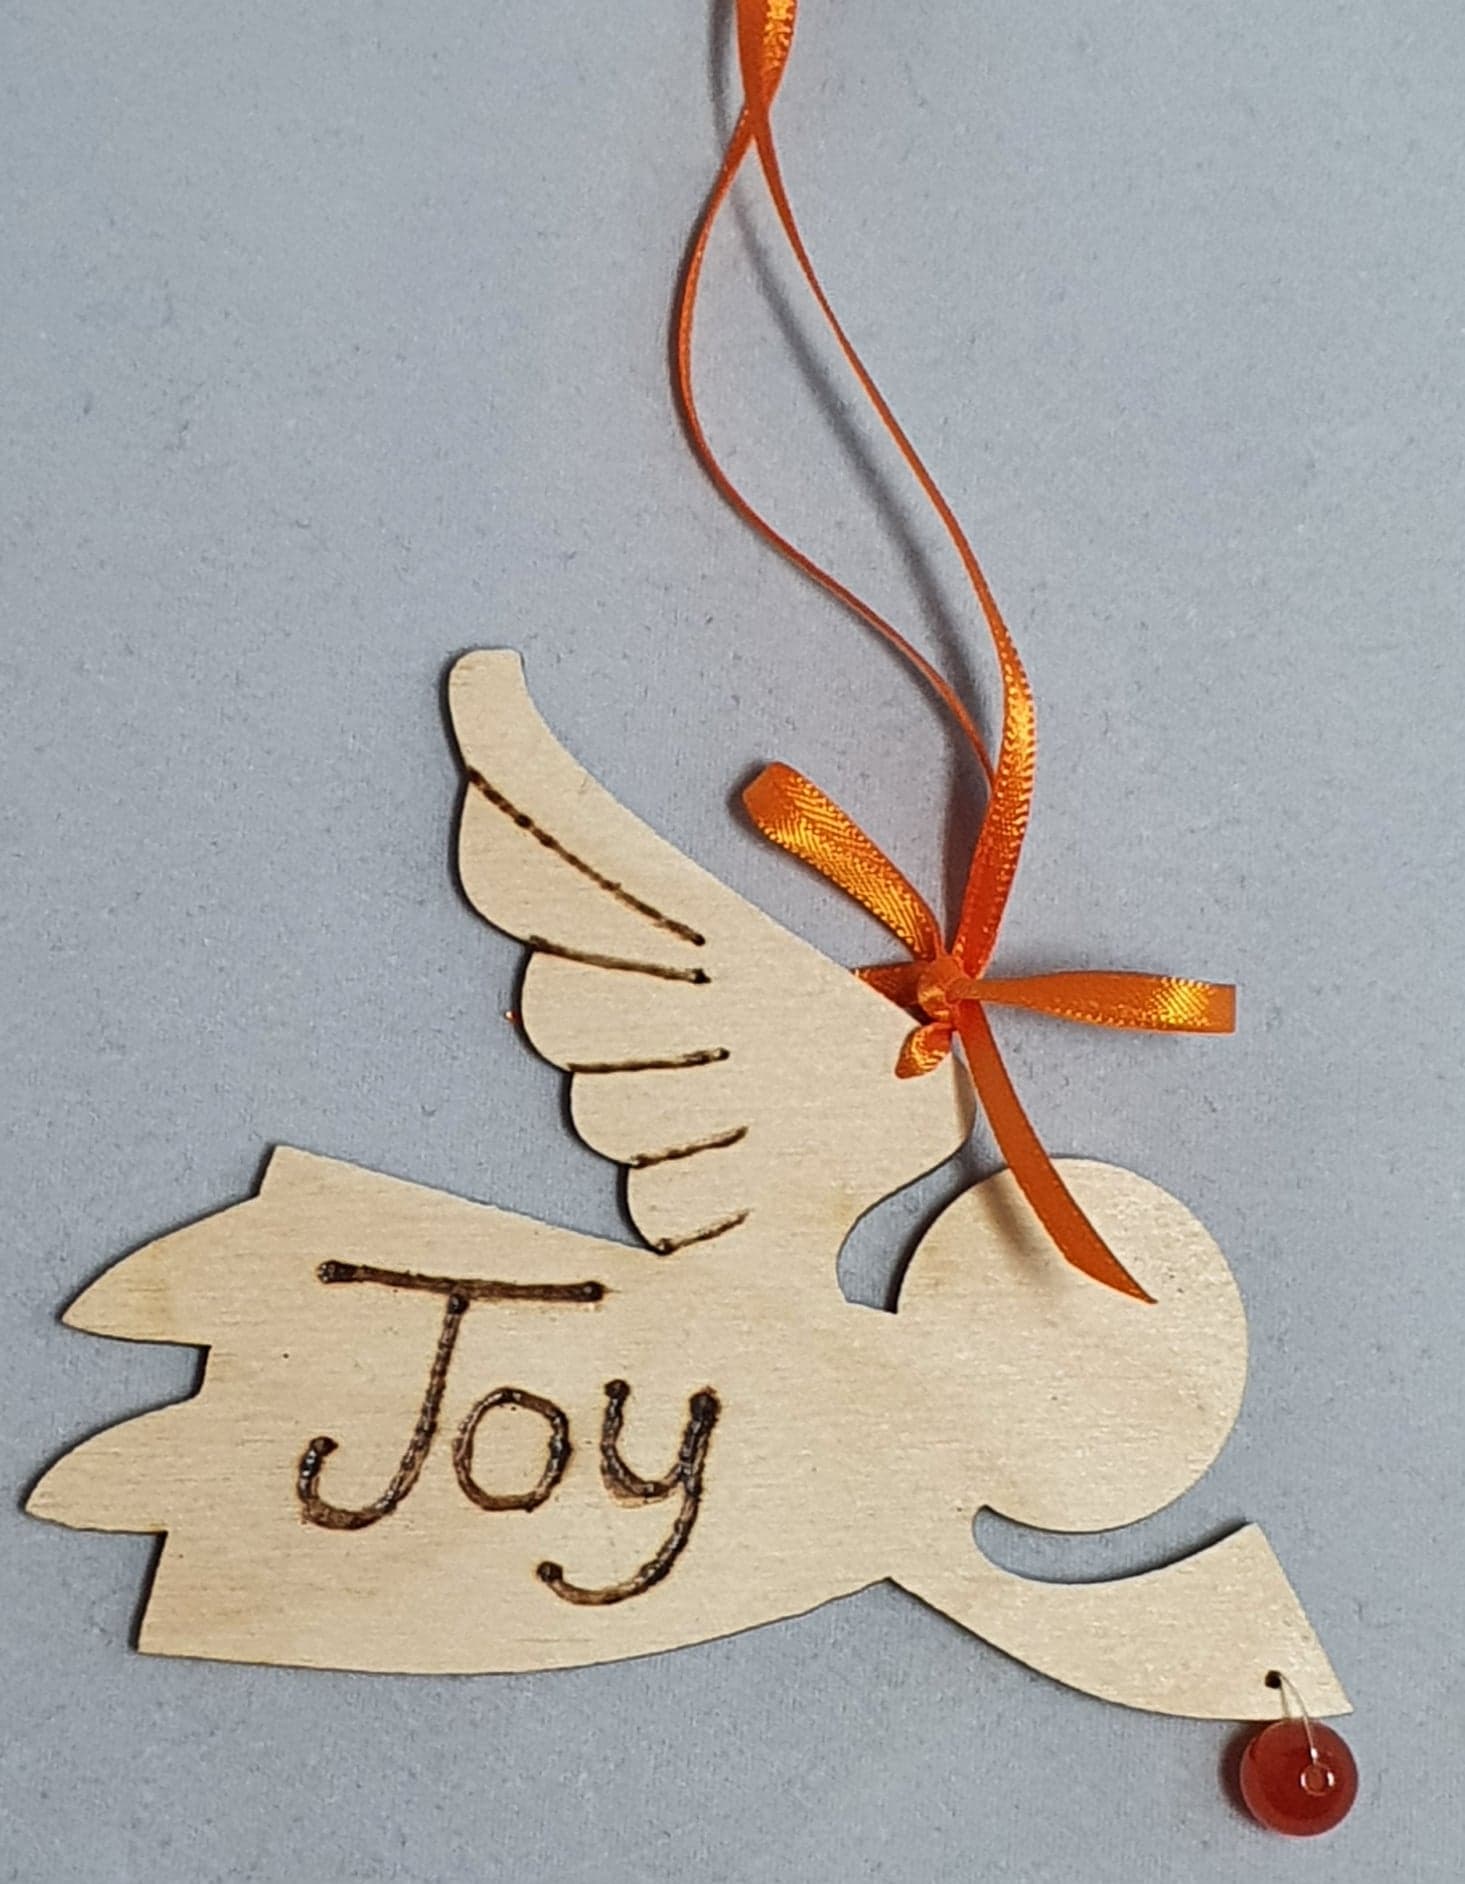 Rustic Charm Flying Angel with word "Joy" Carnelian